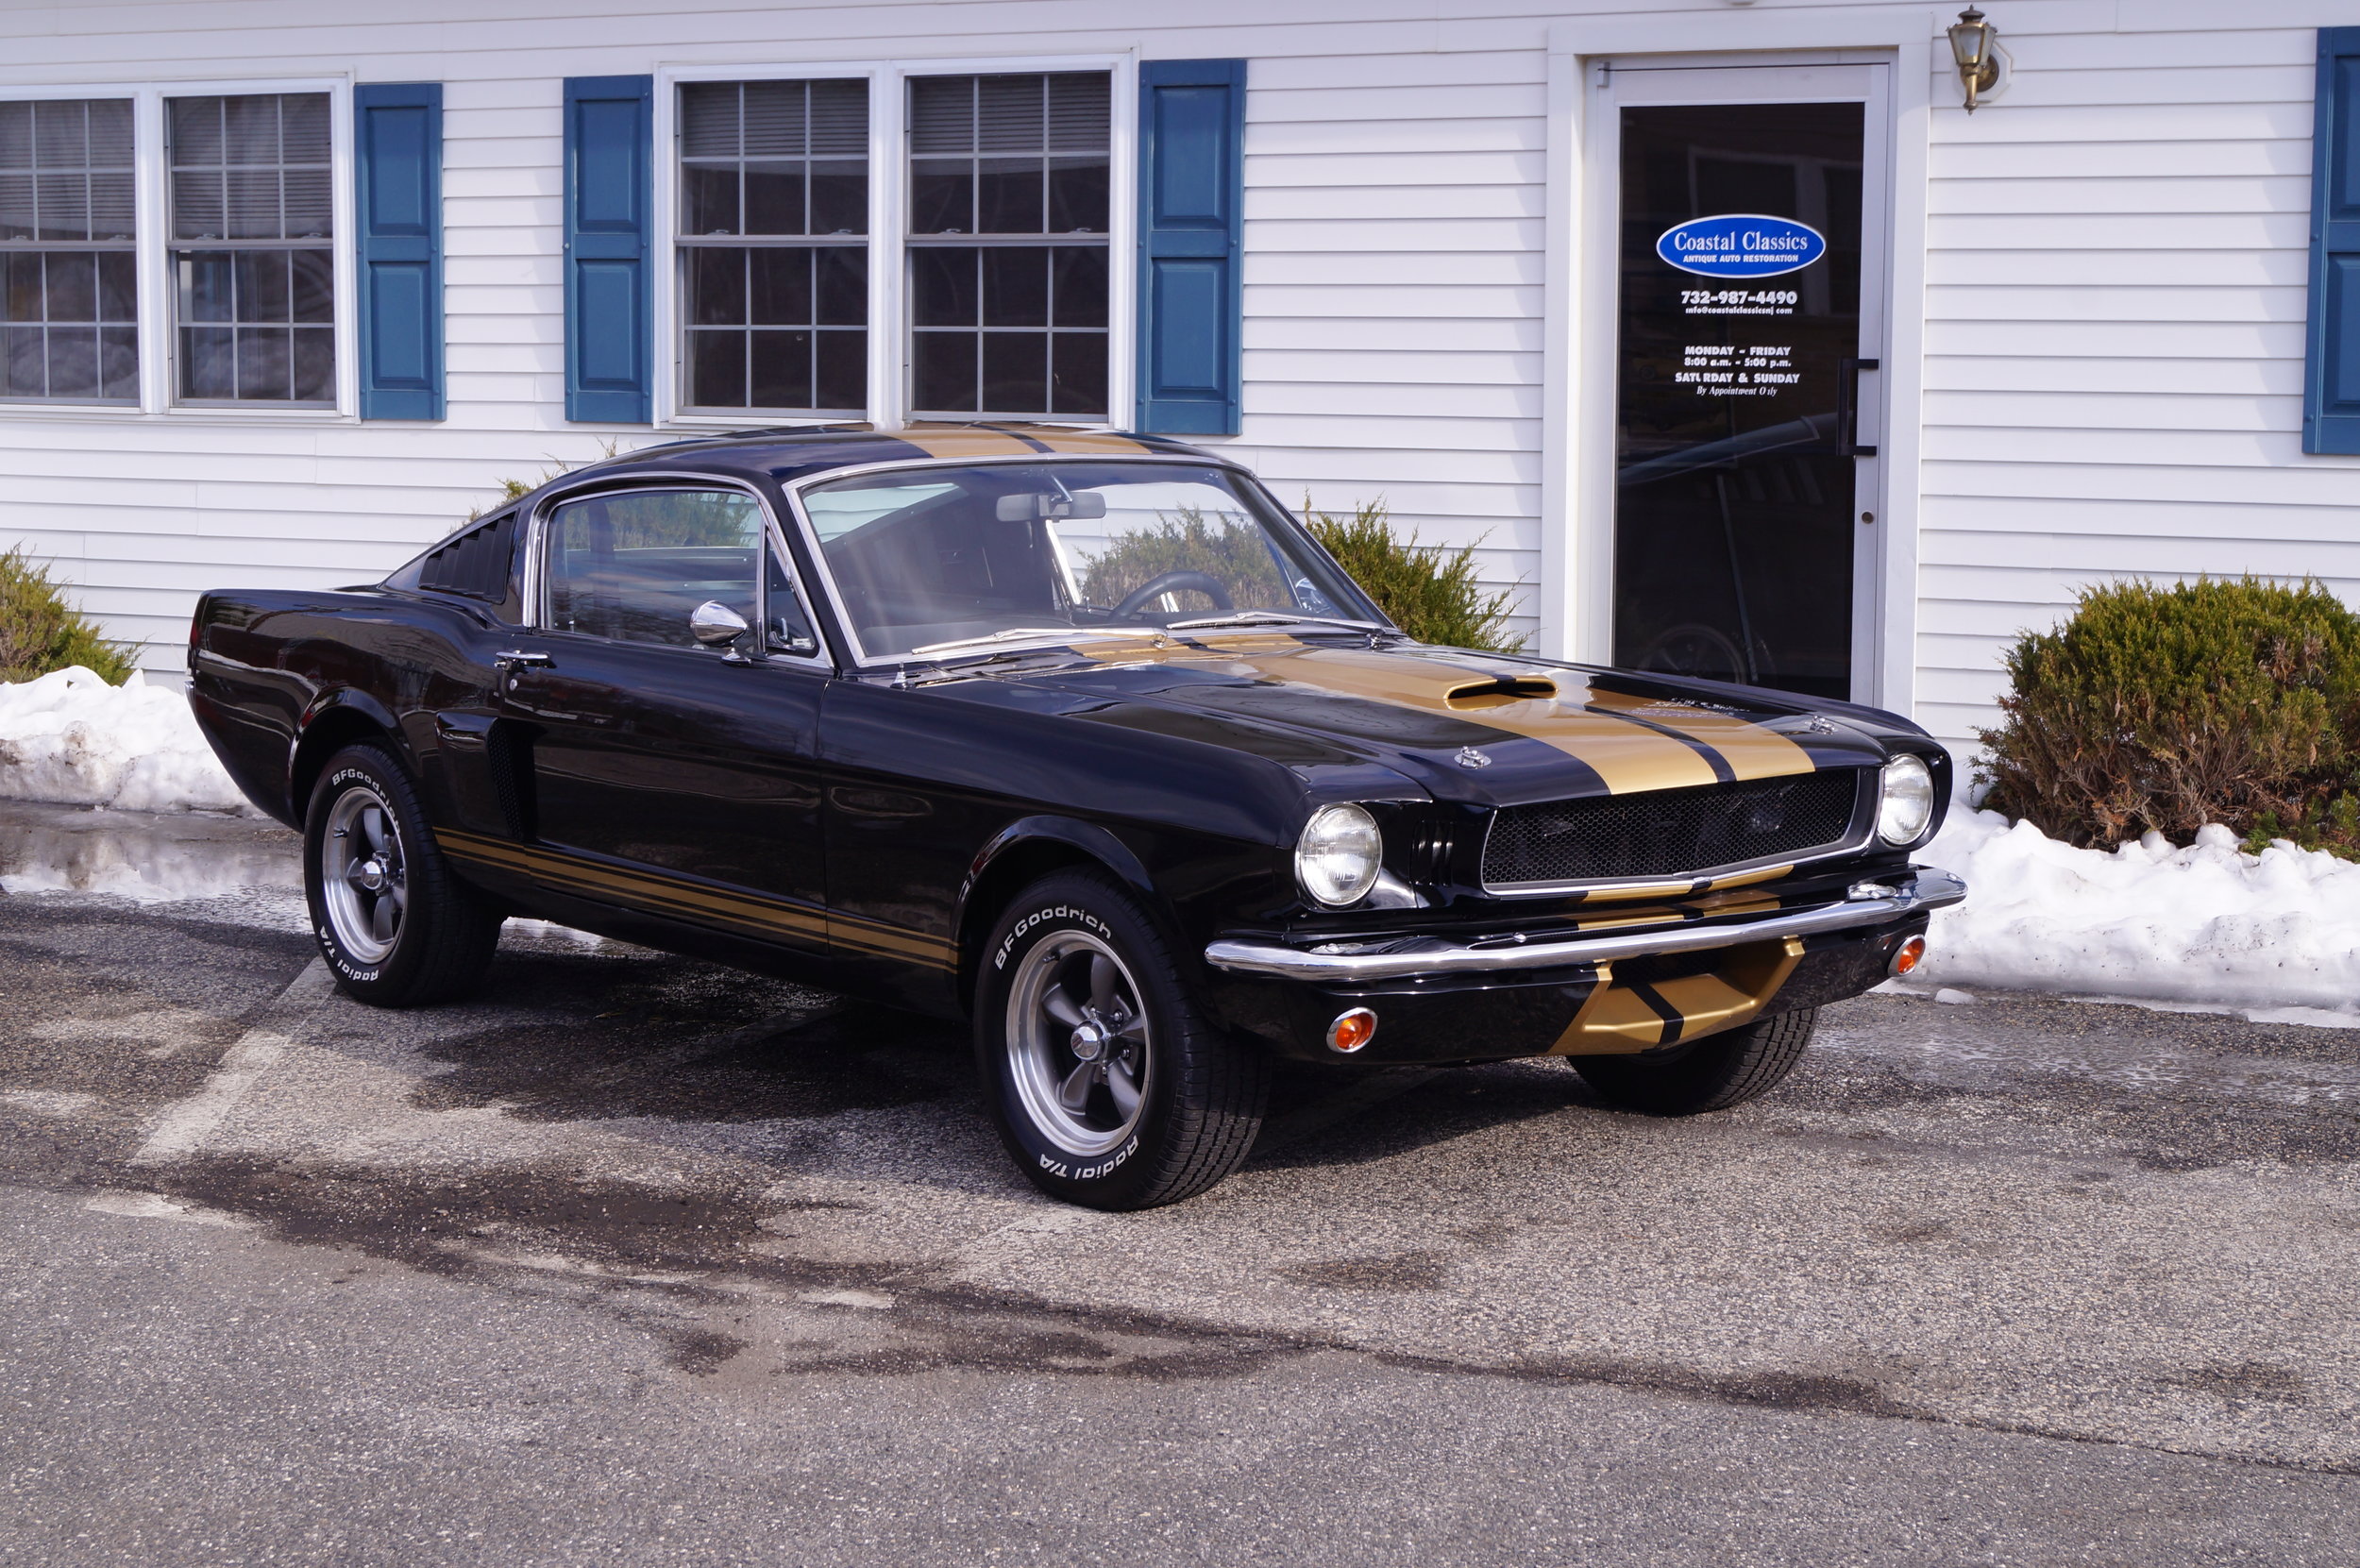 1965 Mustang - DG 173.jpg